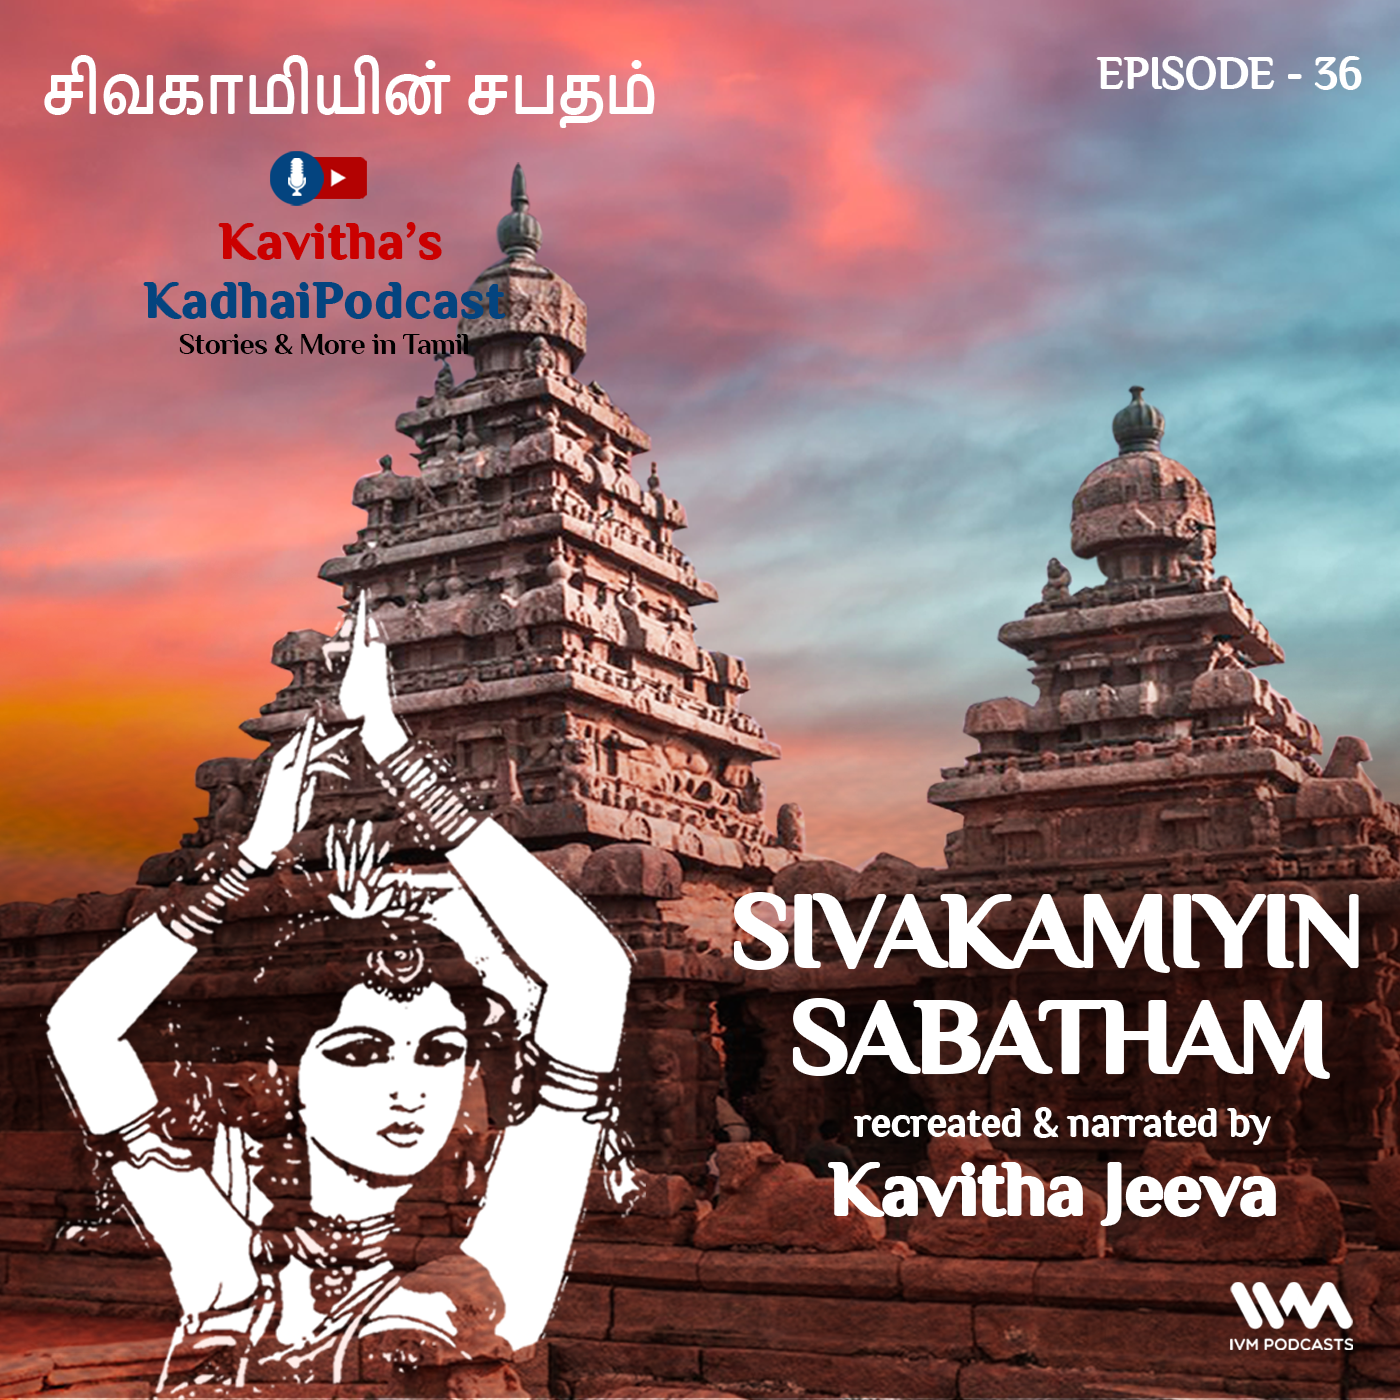 KadhaiPodcast's Sivakamiyin Sabatham - Episode # 36